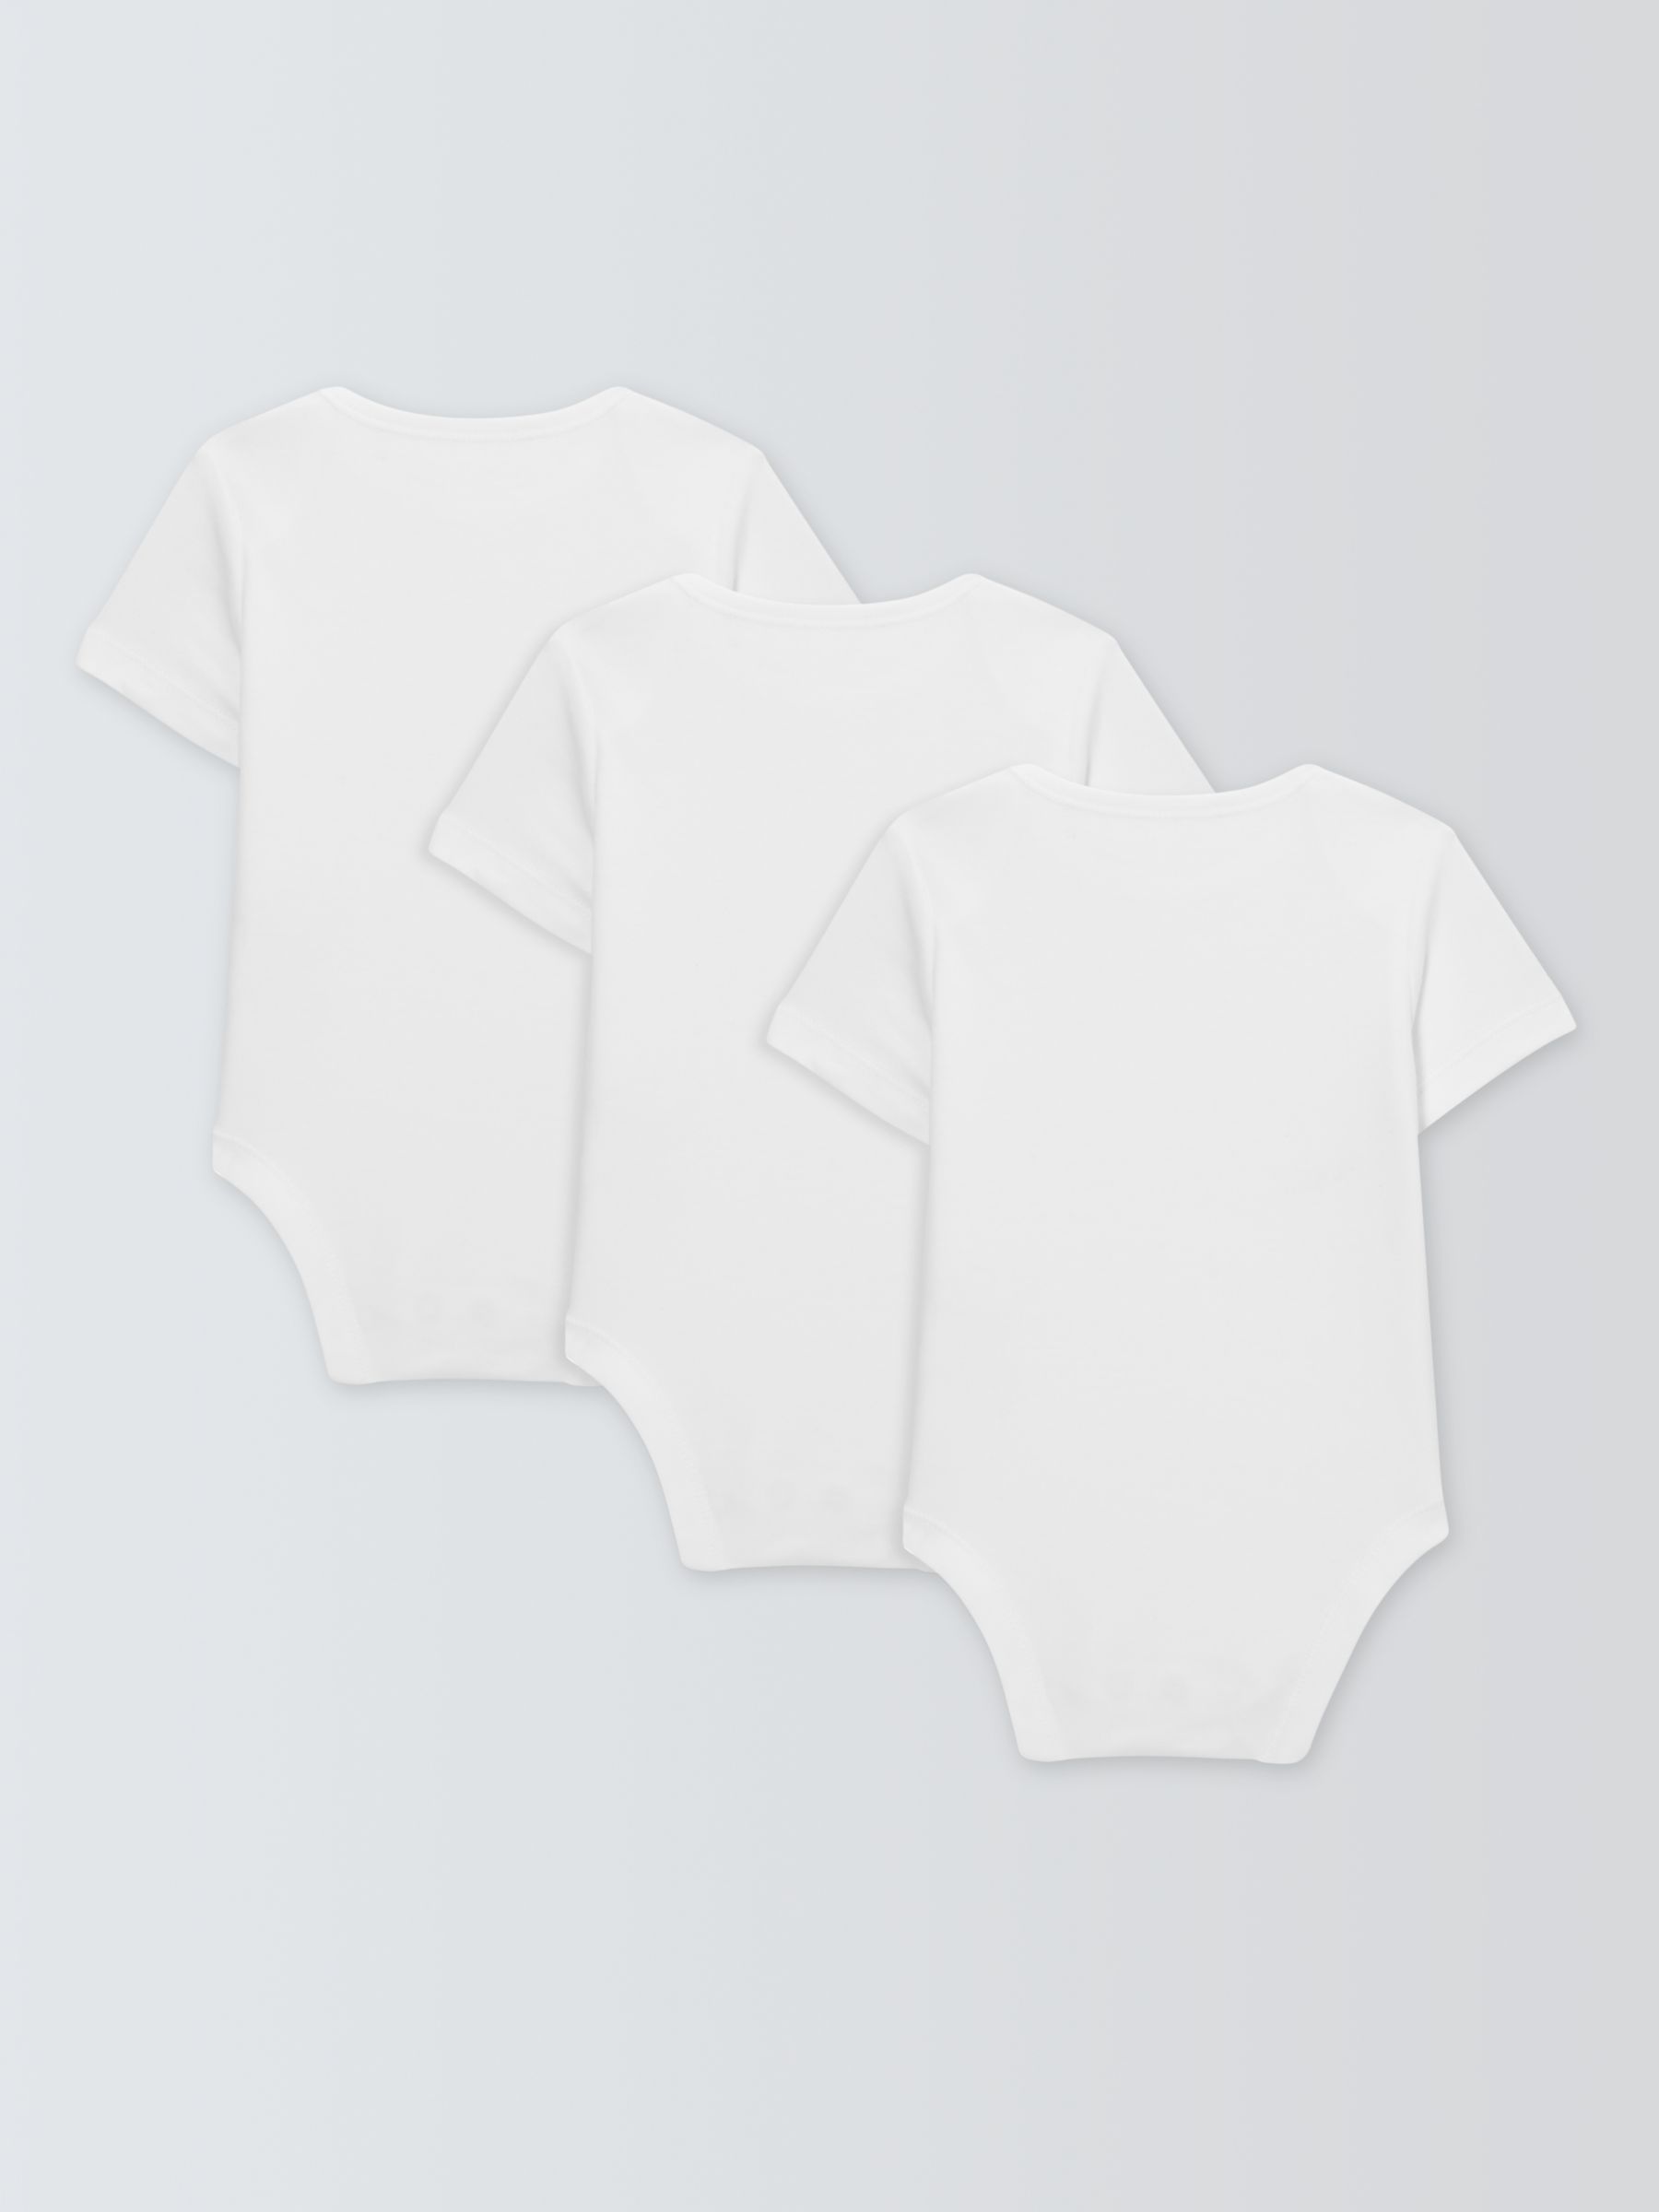 John Lewis Baby Pima Cotton Sleeveless Bodysuit, Pack of 3, White